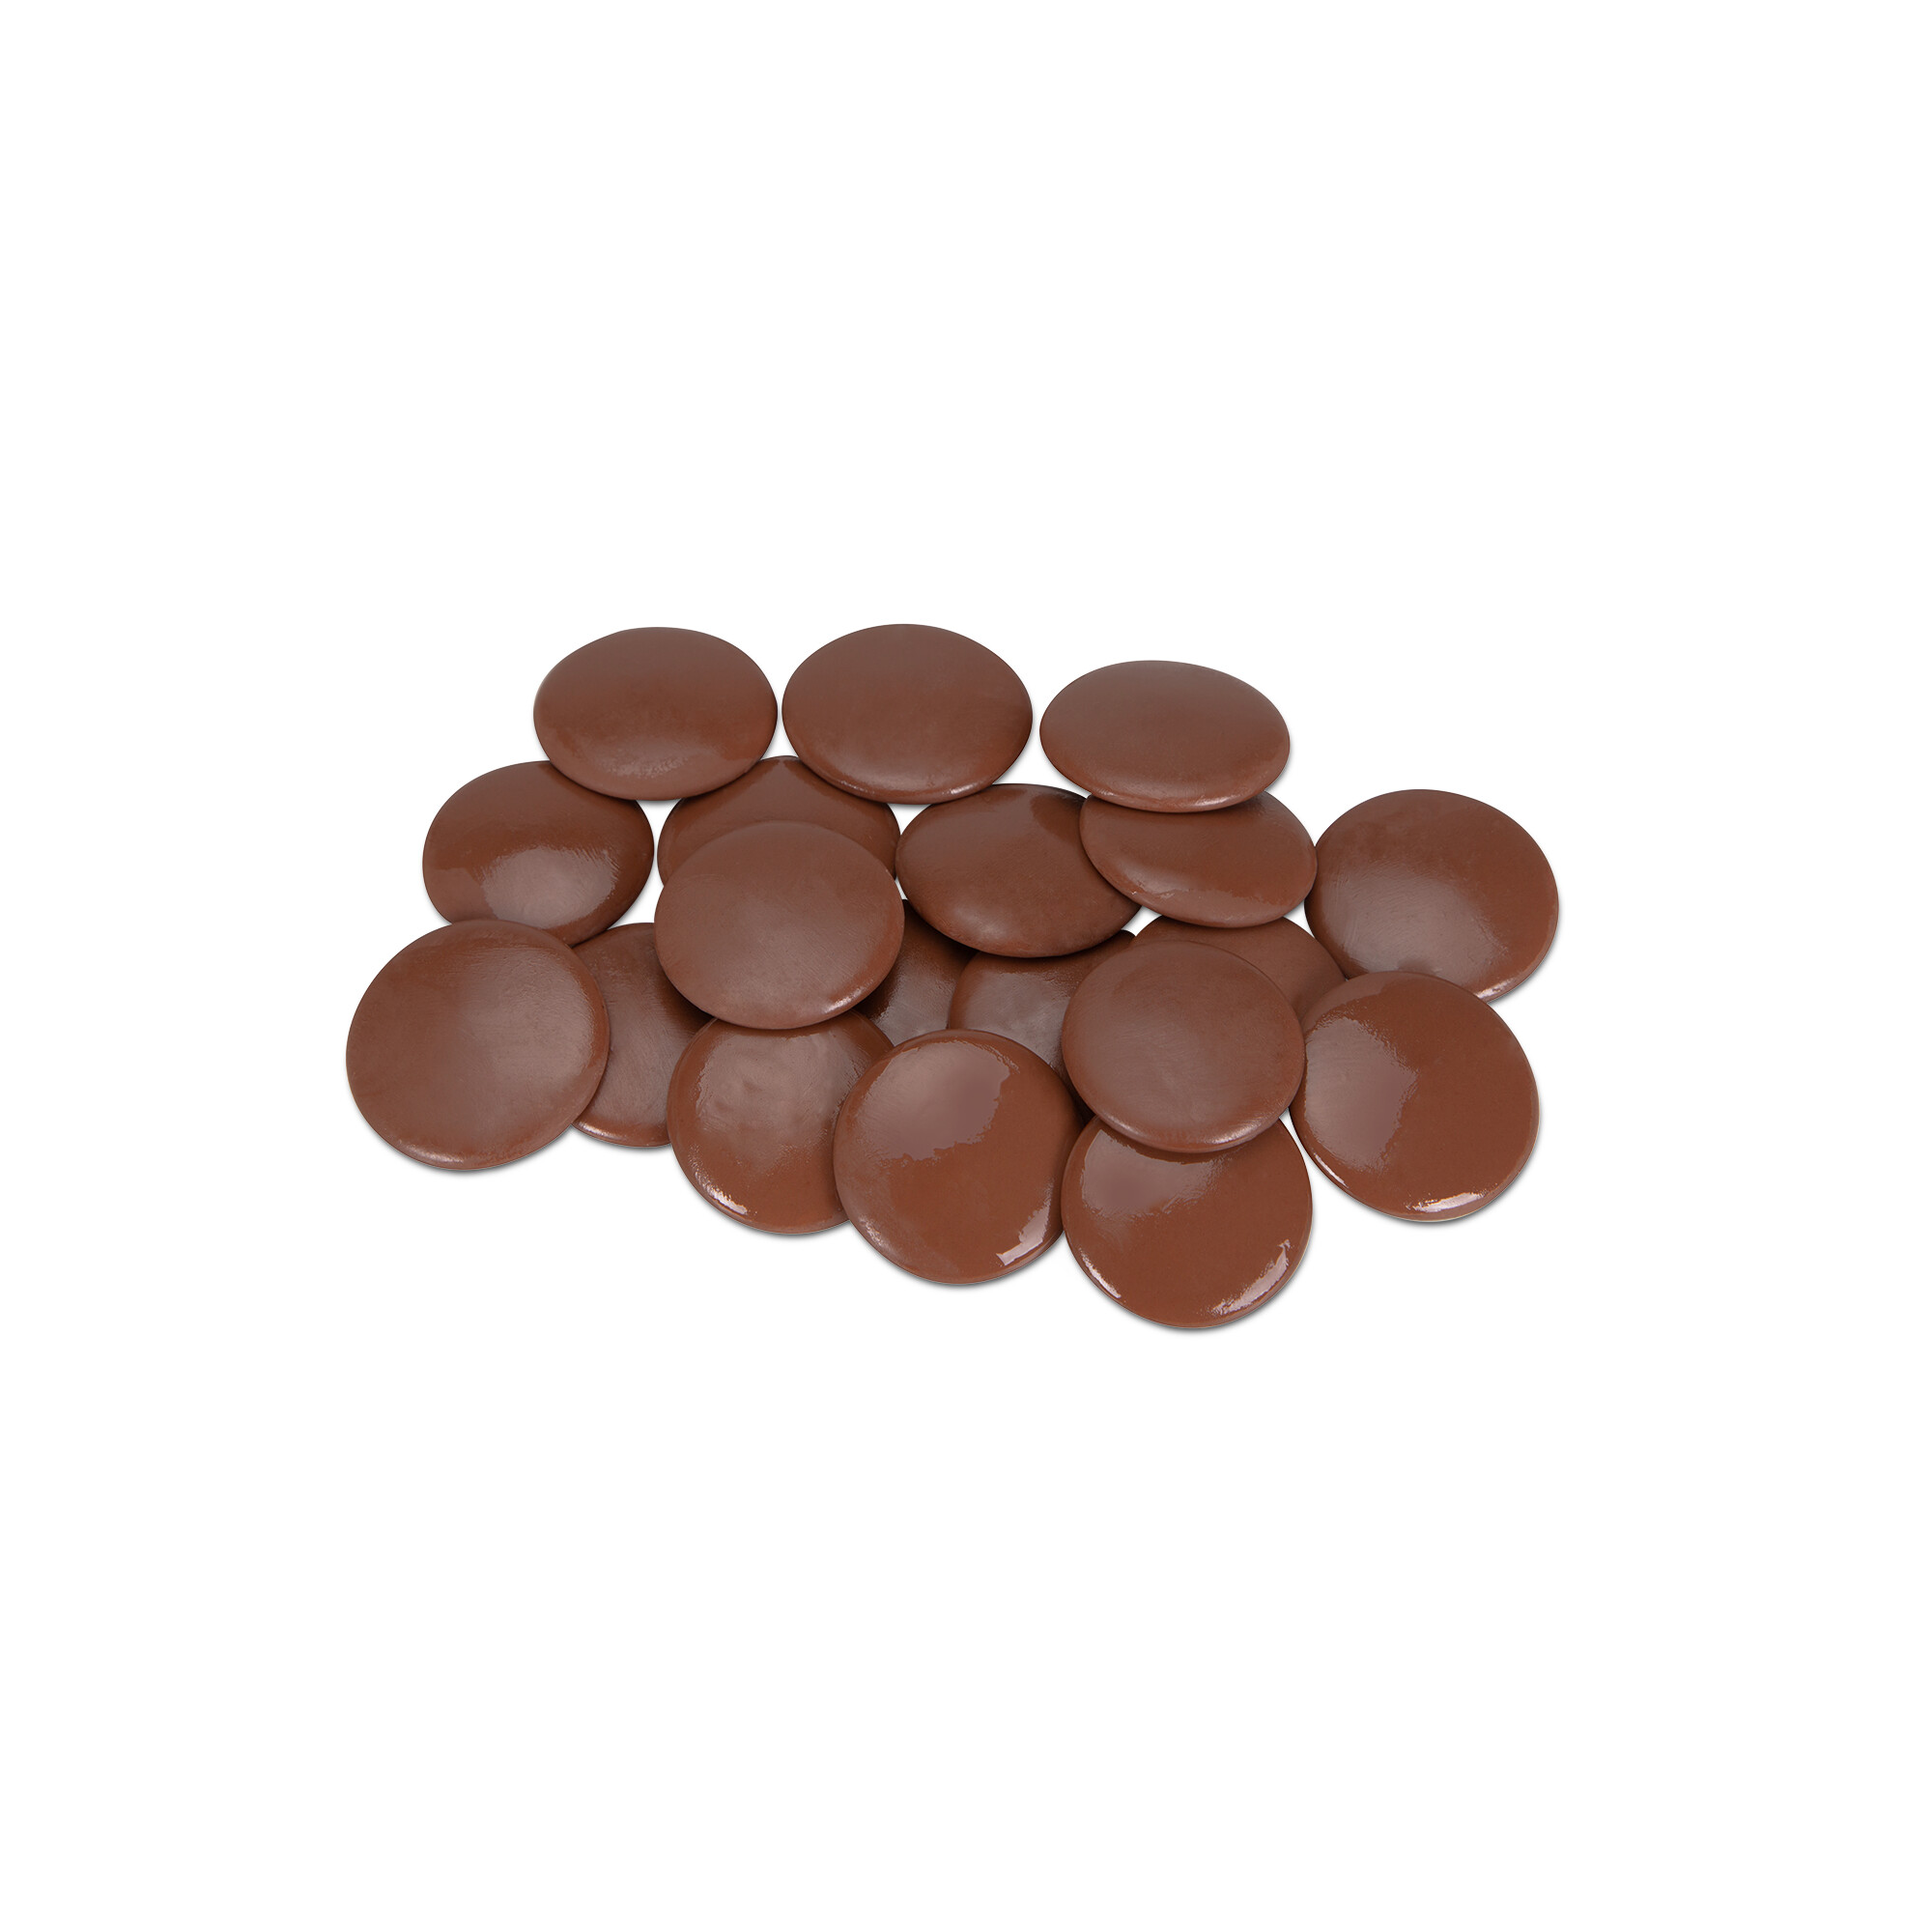 Kuvertüre – Edelvollmilch-Schokolade – Drops